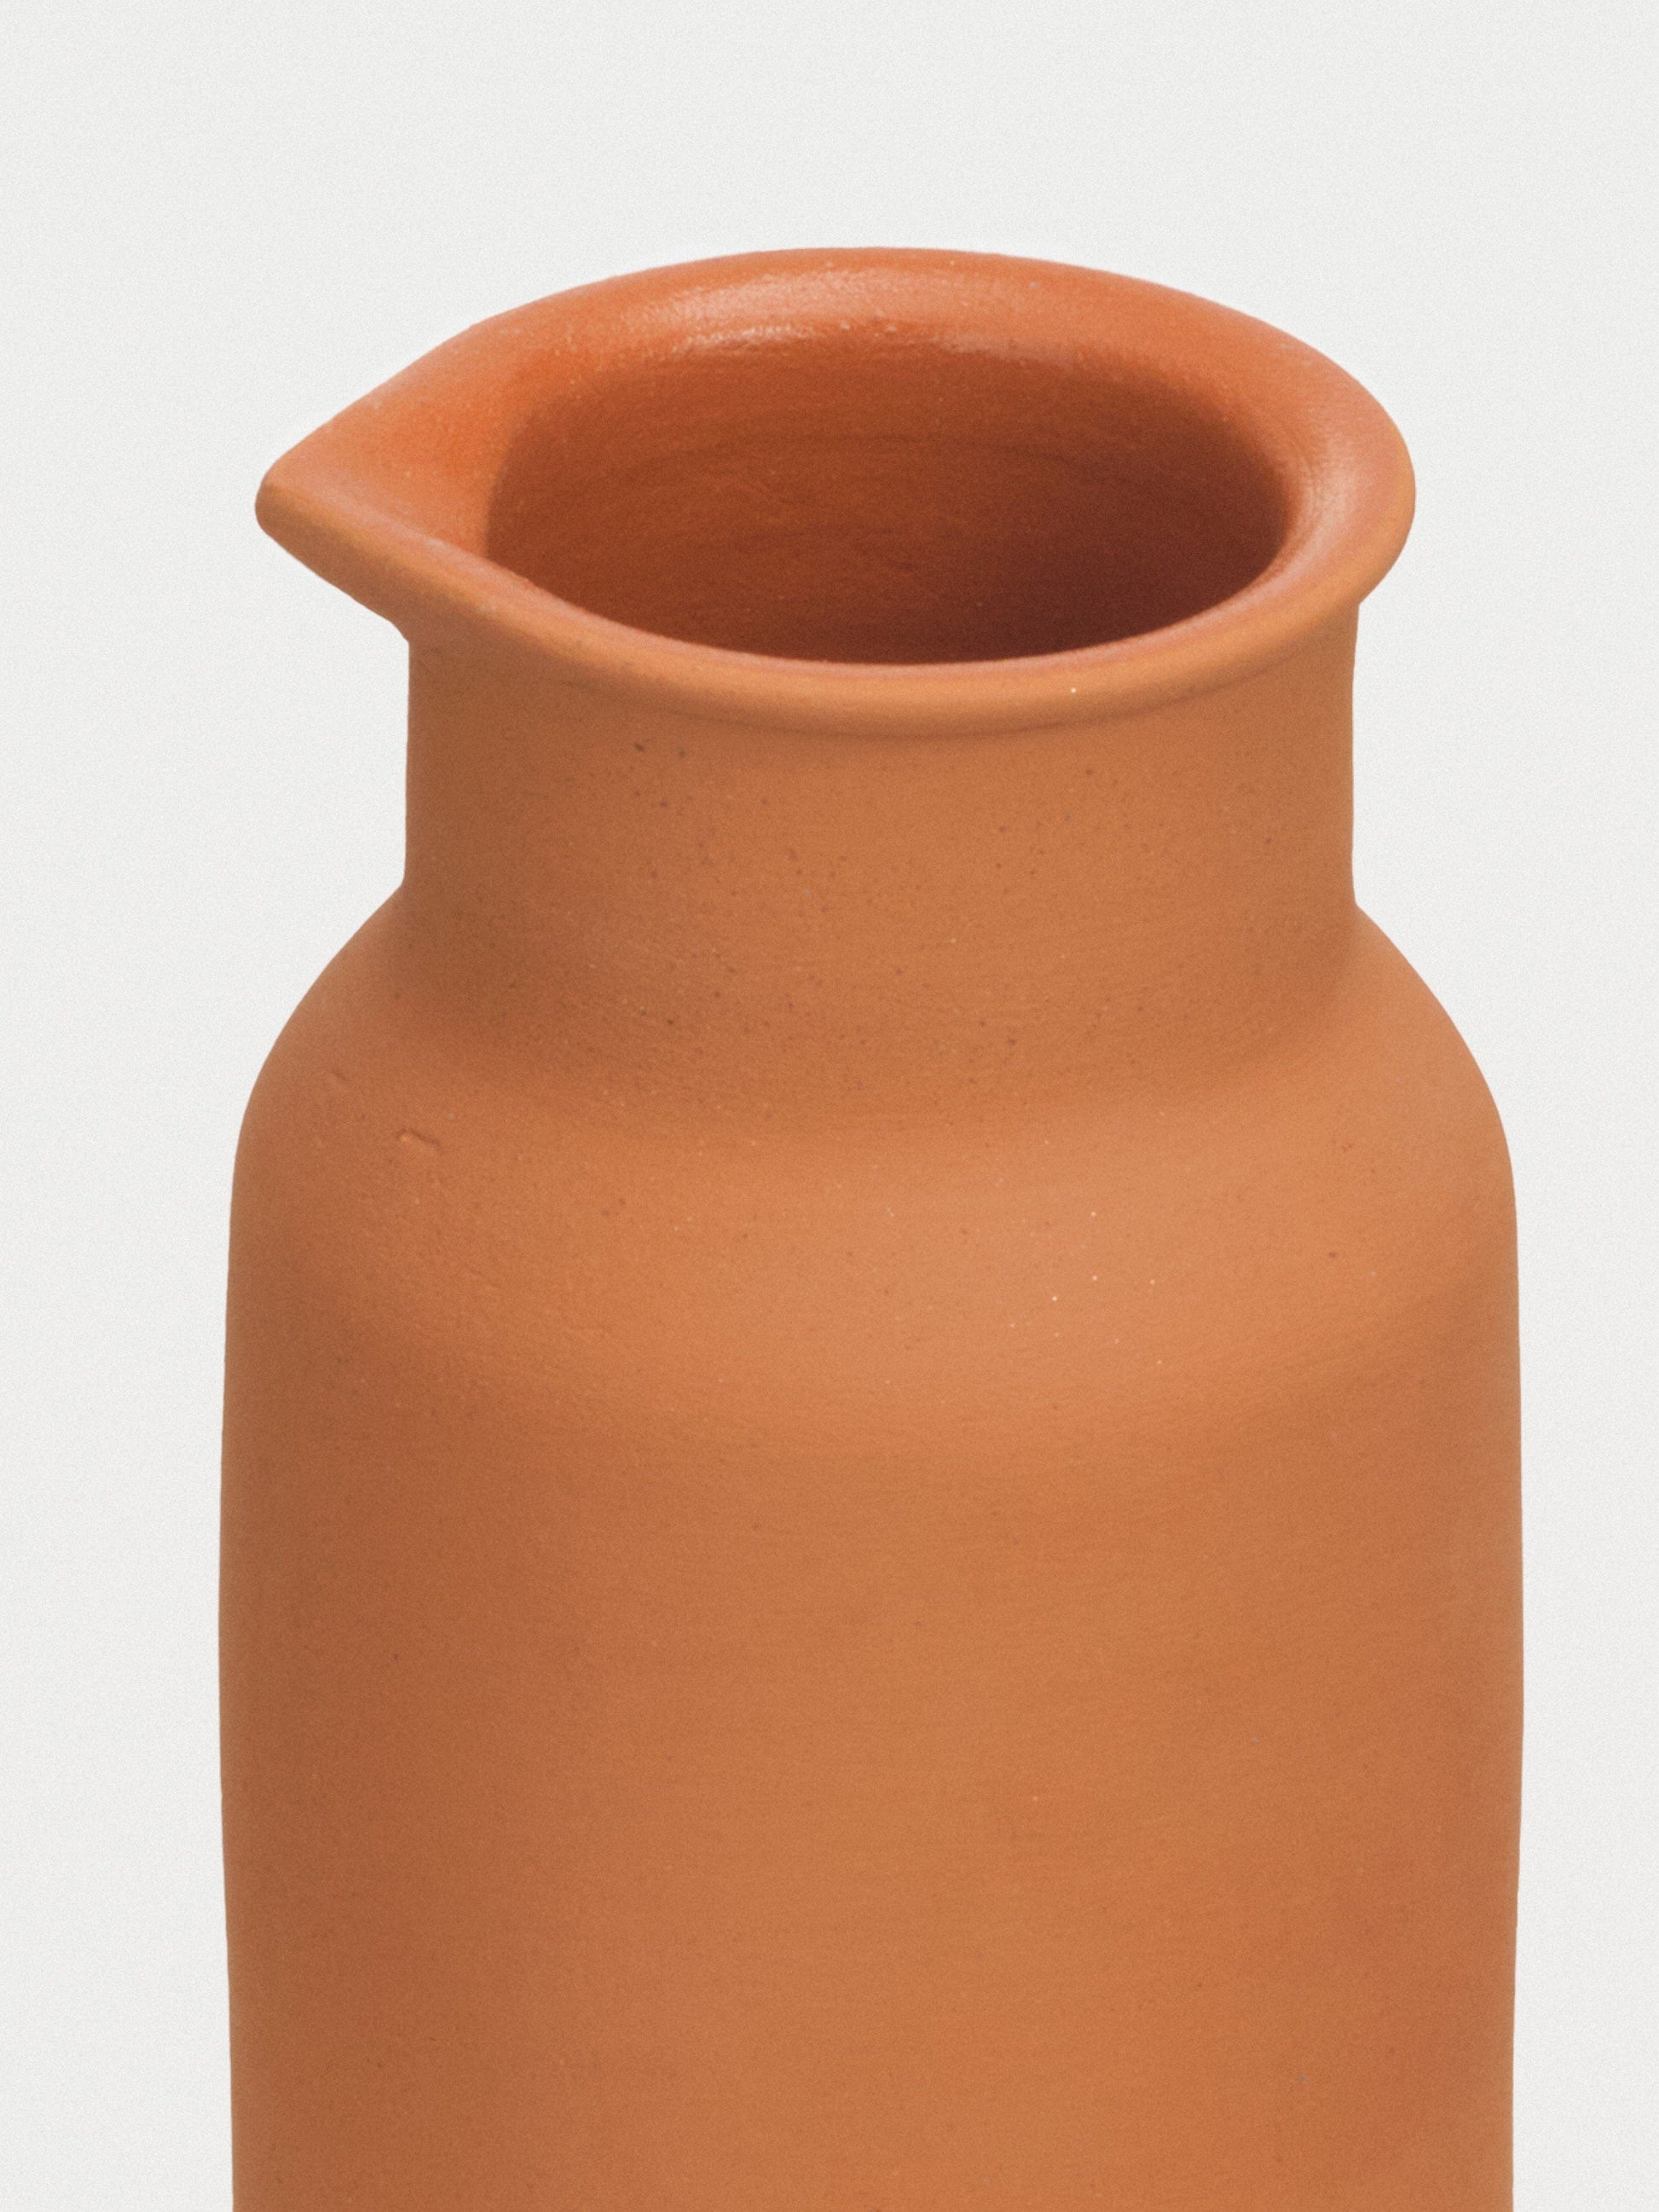 Teraacotta Ceramic Pitcher